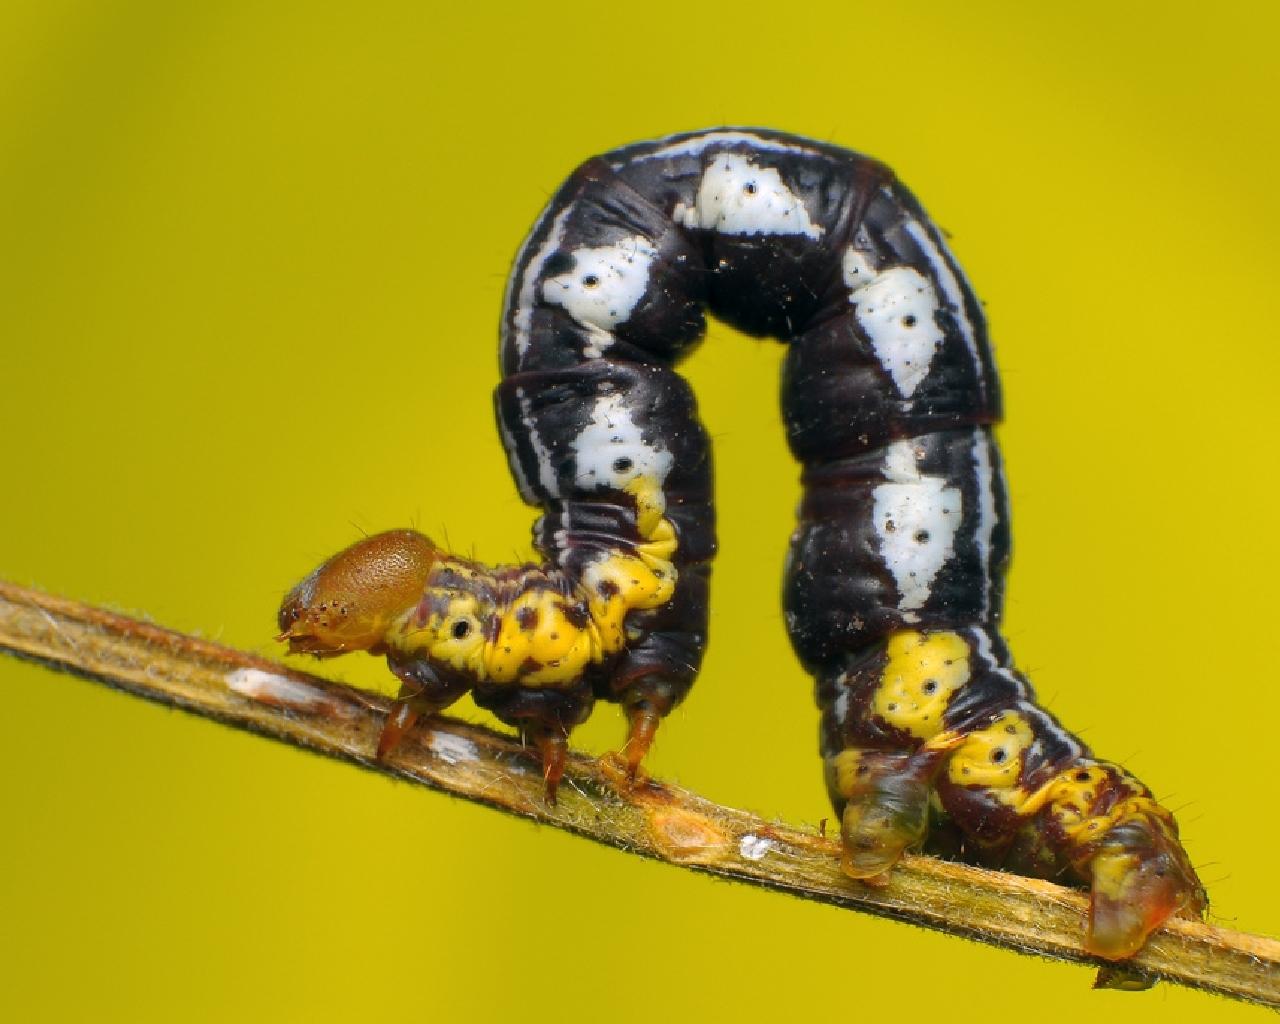 Caterpillars wallpaper picture download